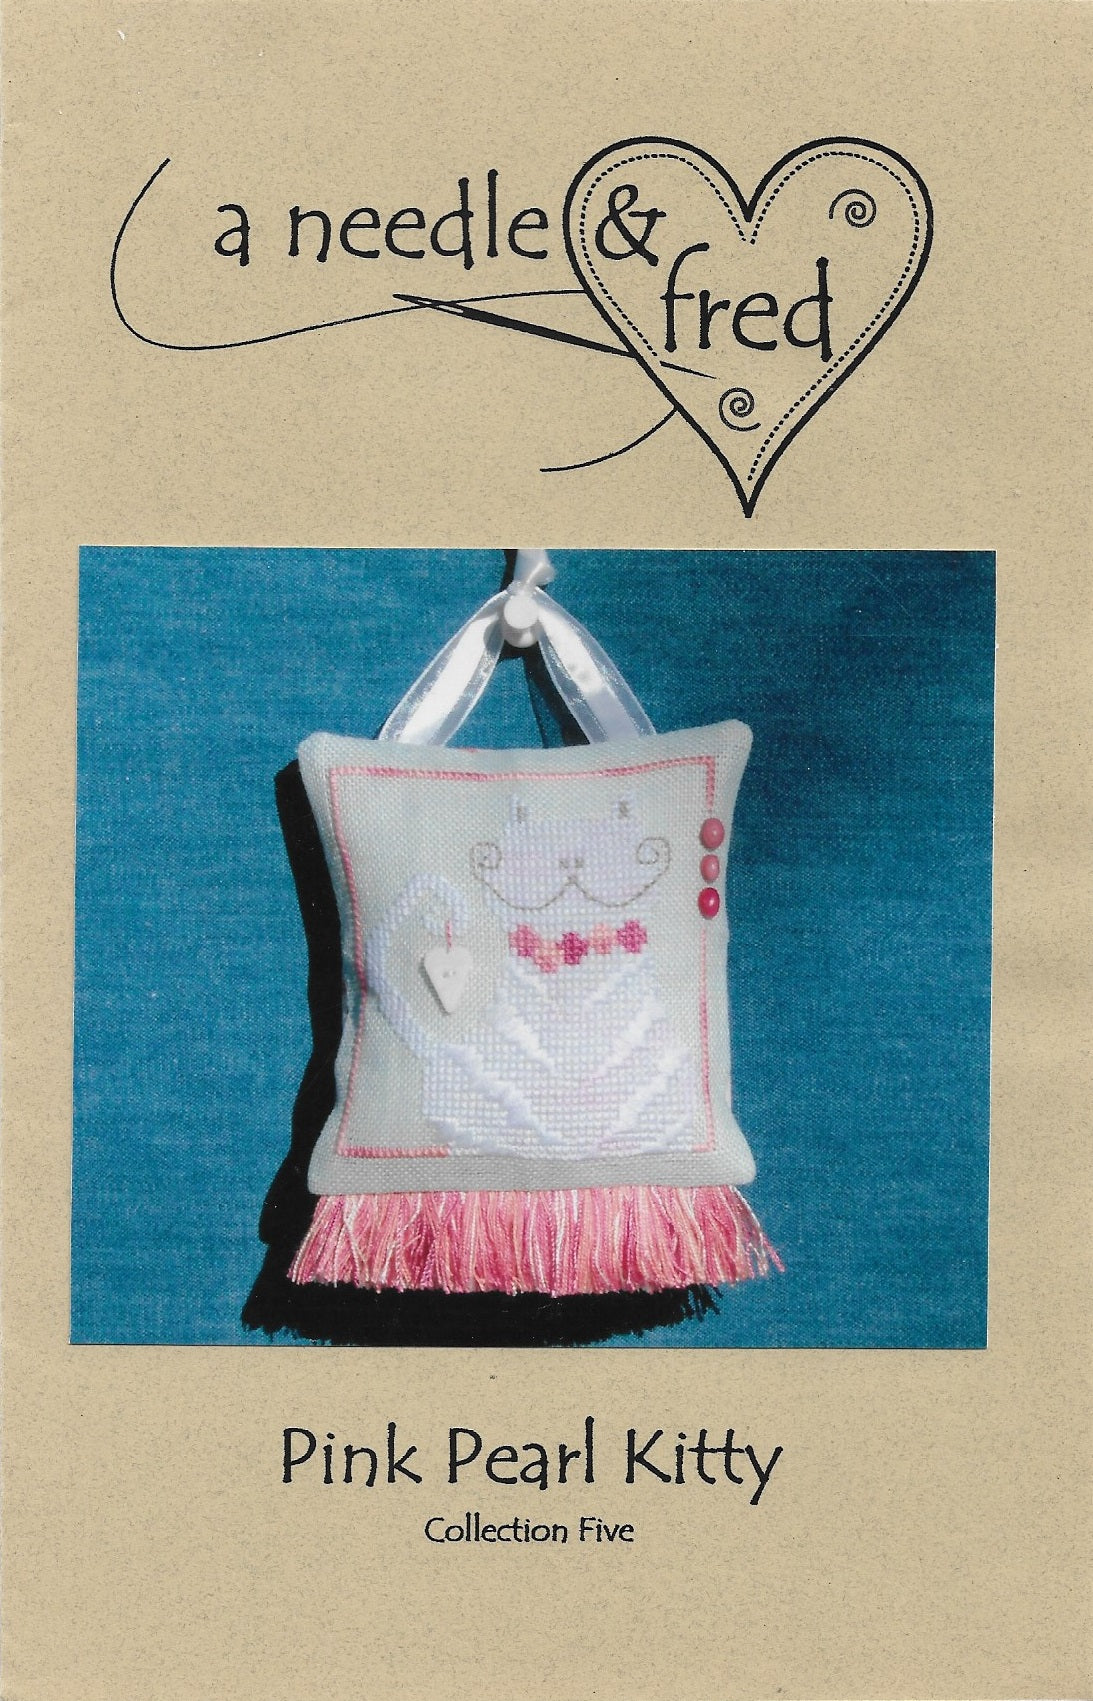 A Needle & Fred Pink Pearl Kitty cat cross stitch pattern